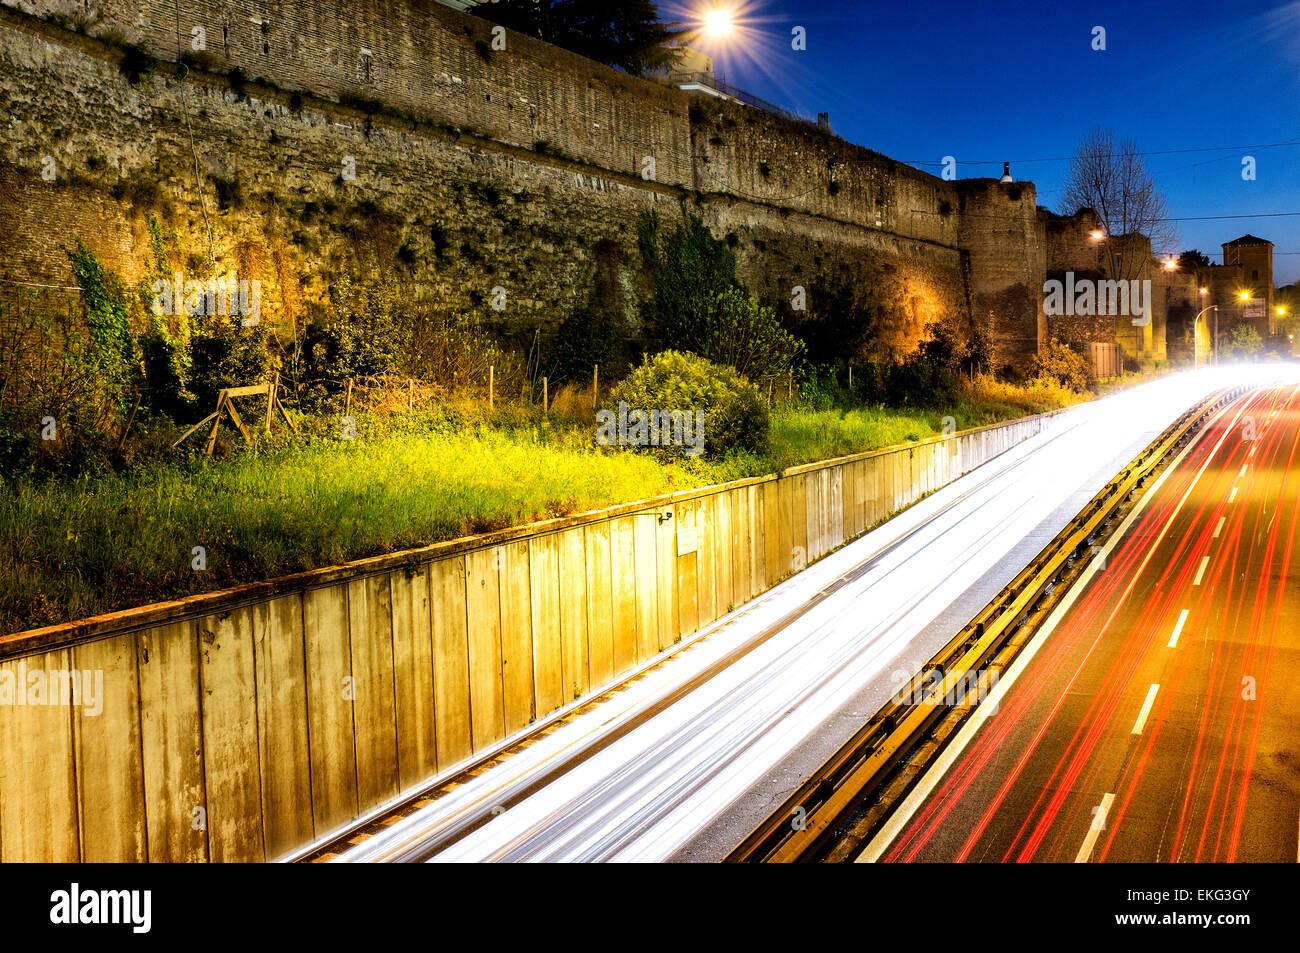 Section of the Aurelian walls between Porta Pia and Porta Pinciana, Rome, Italy Stock Photo